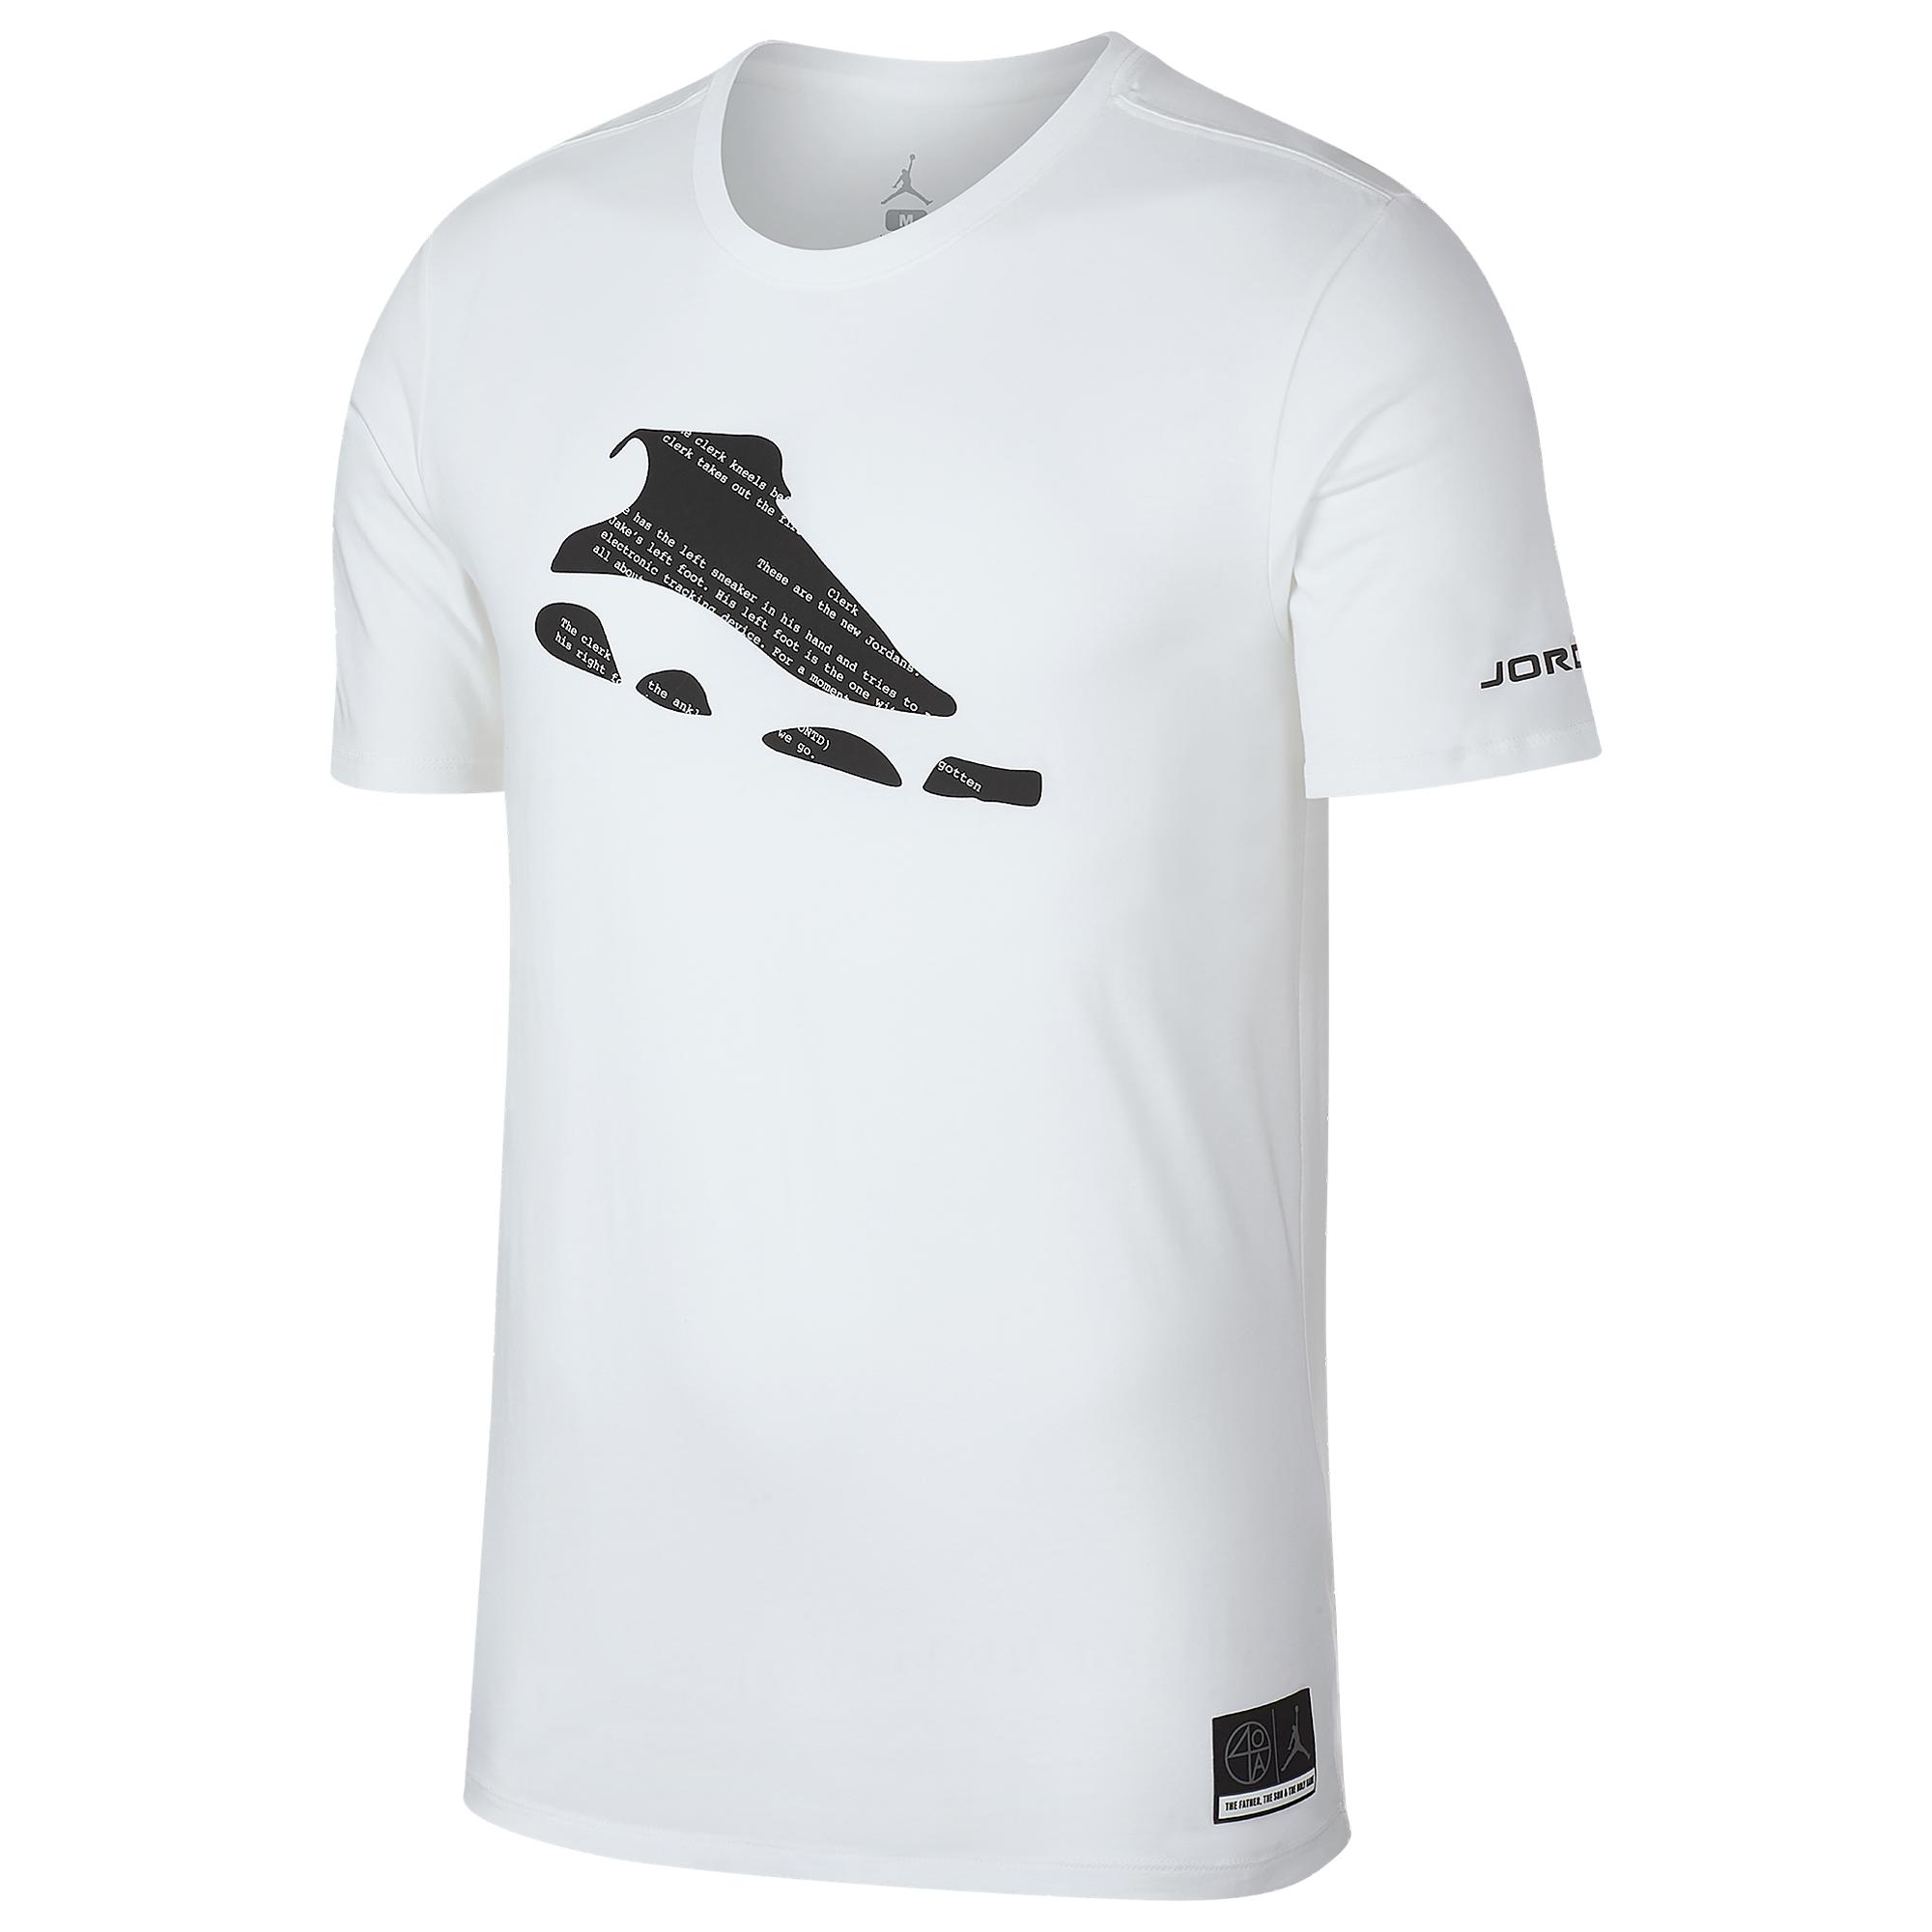 Nike Retro 13 Photo T-shirt in White for Men - Lyst